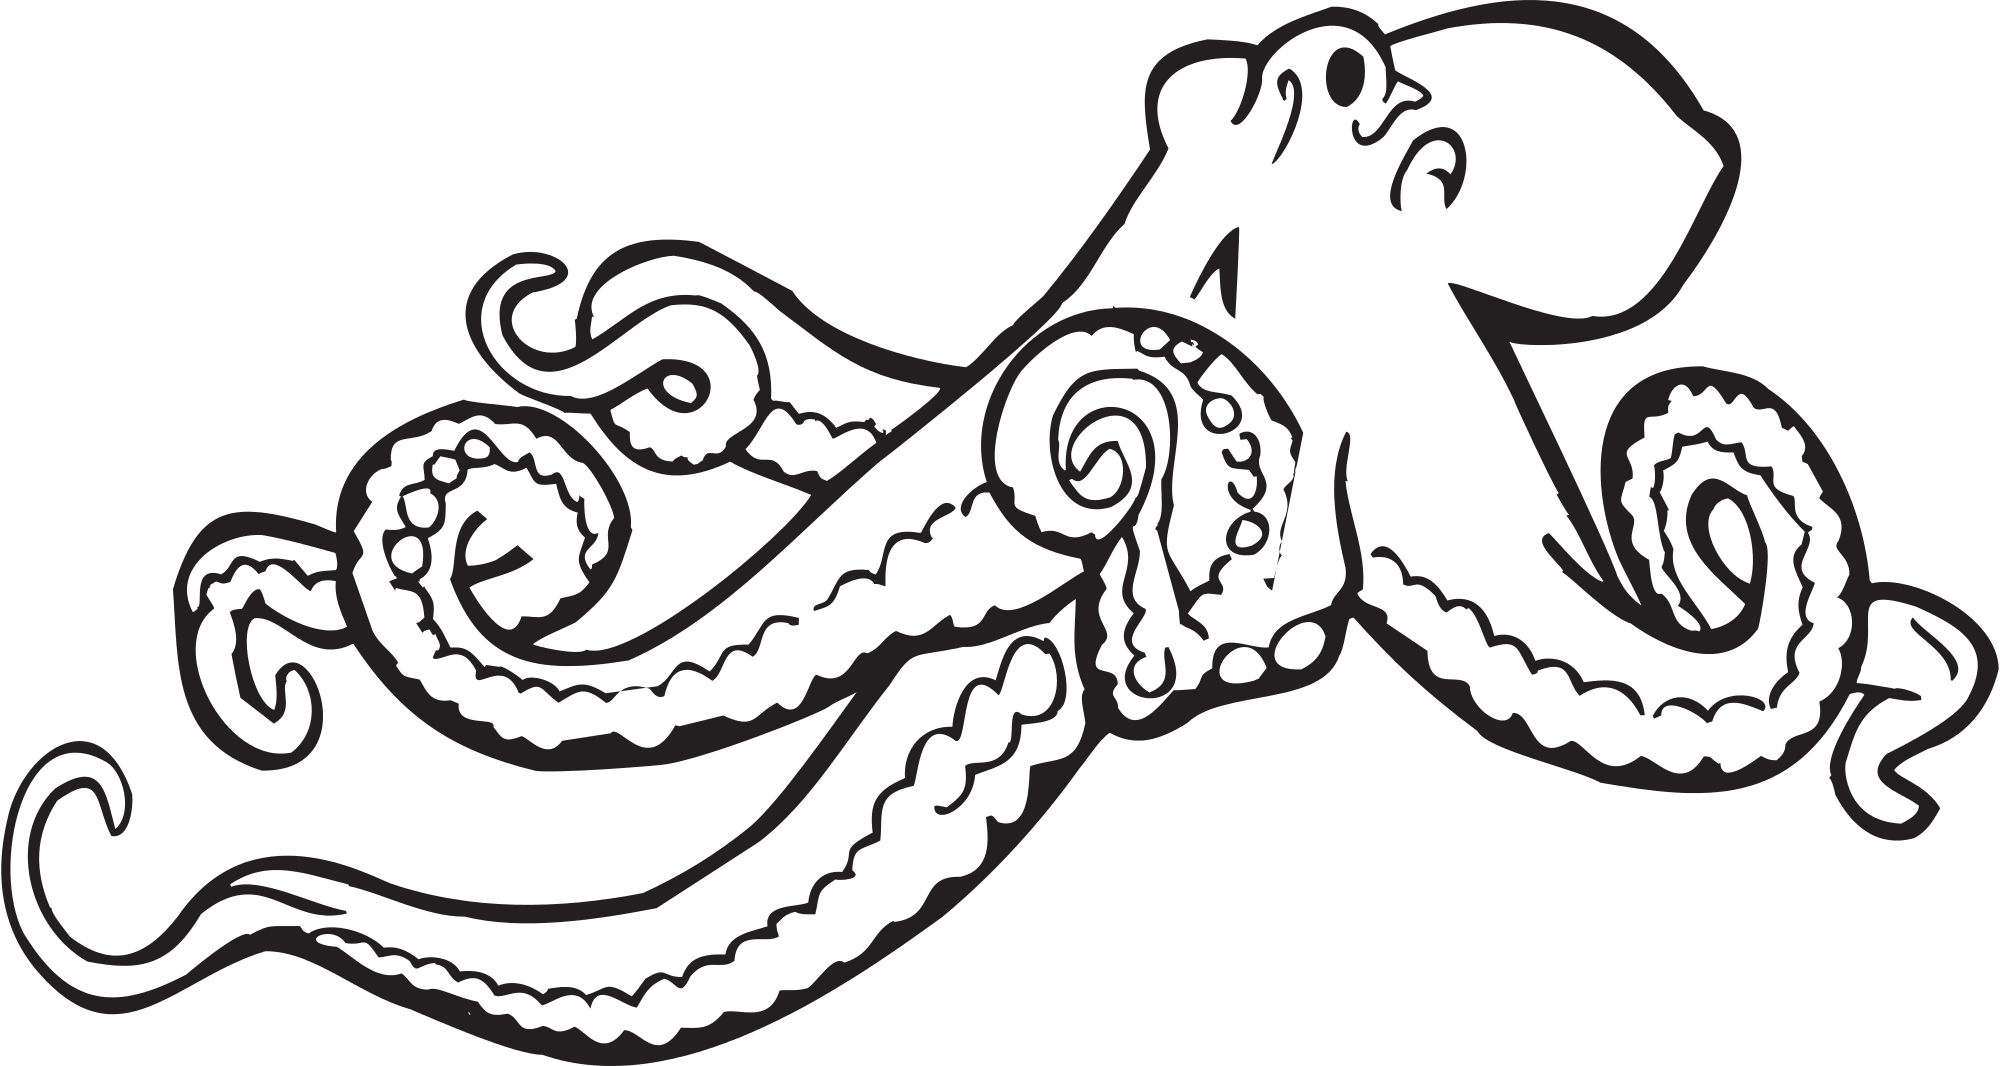 Octopus Illustrations 2 Octopus Vector Image Clipart